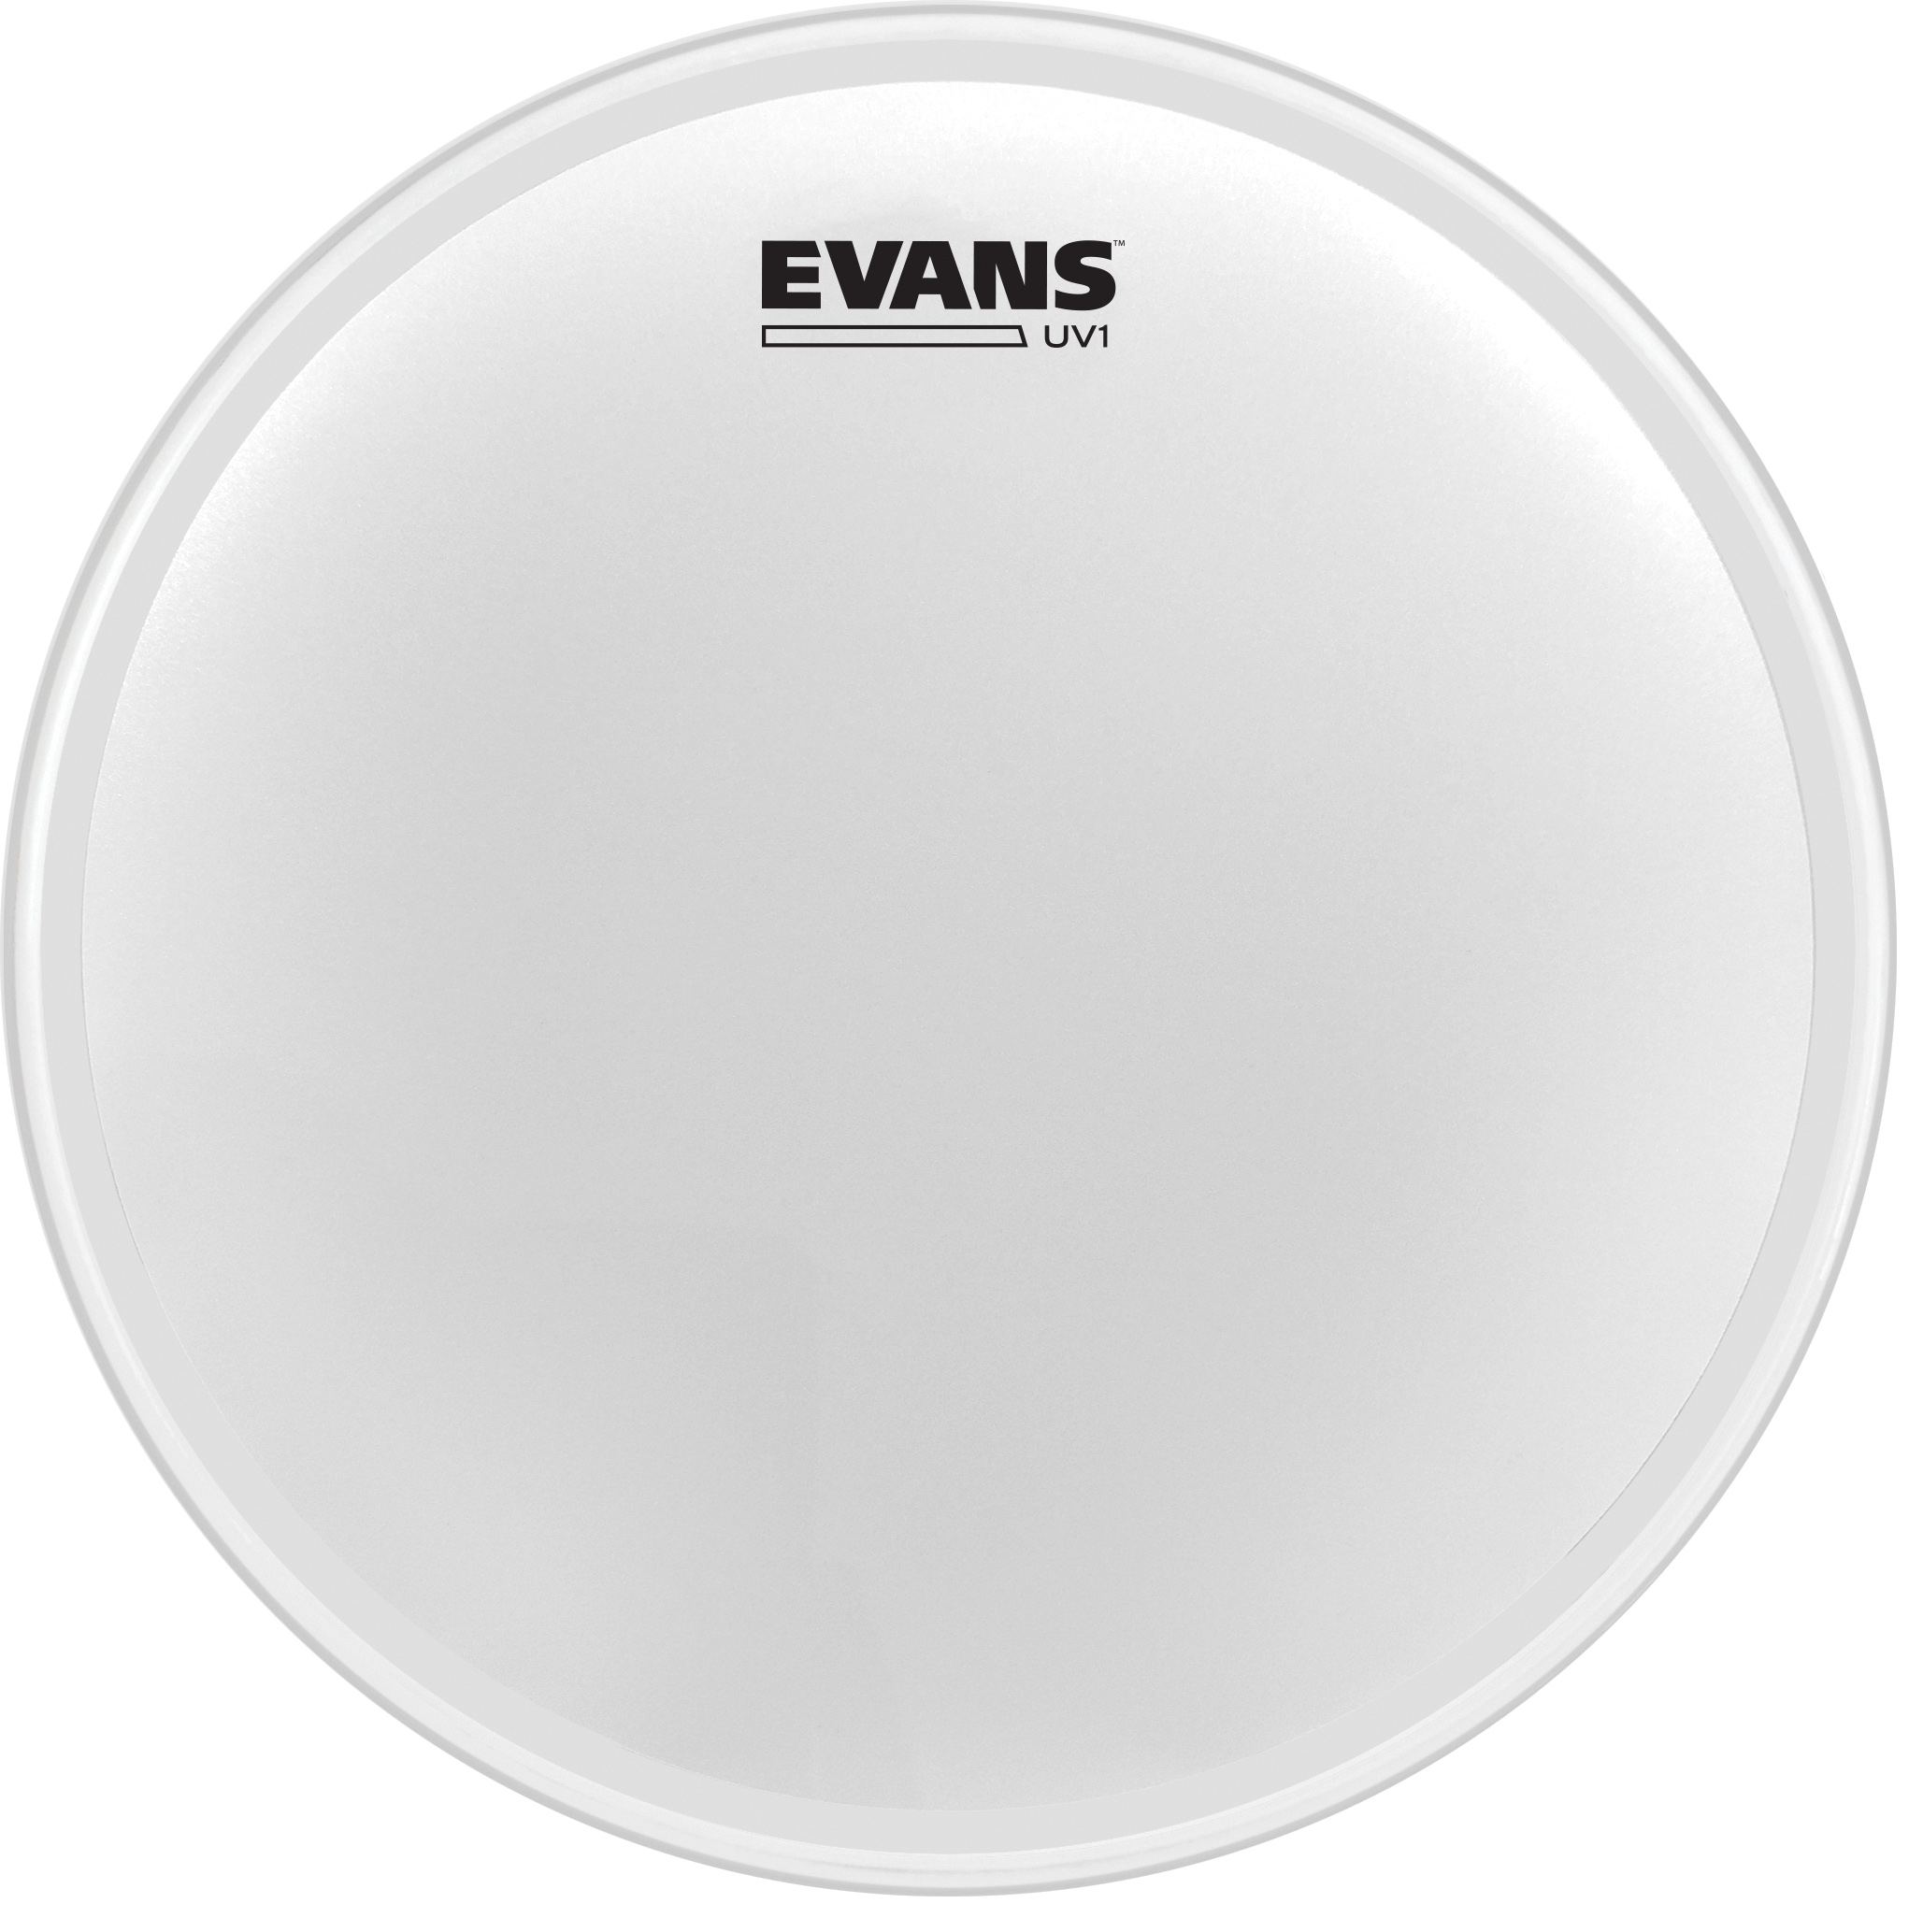 Evans 14" UV1 coated